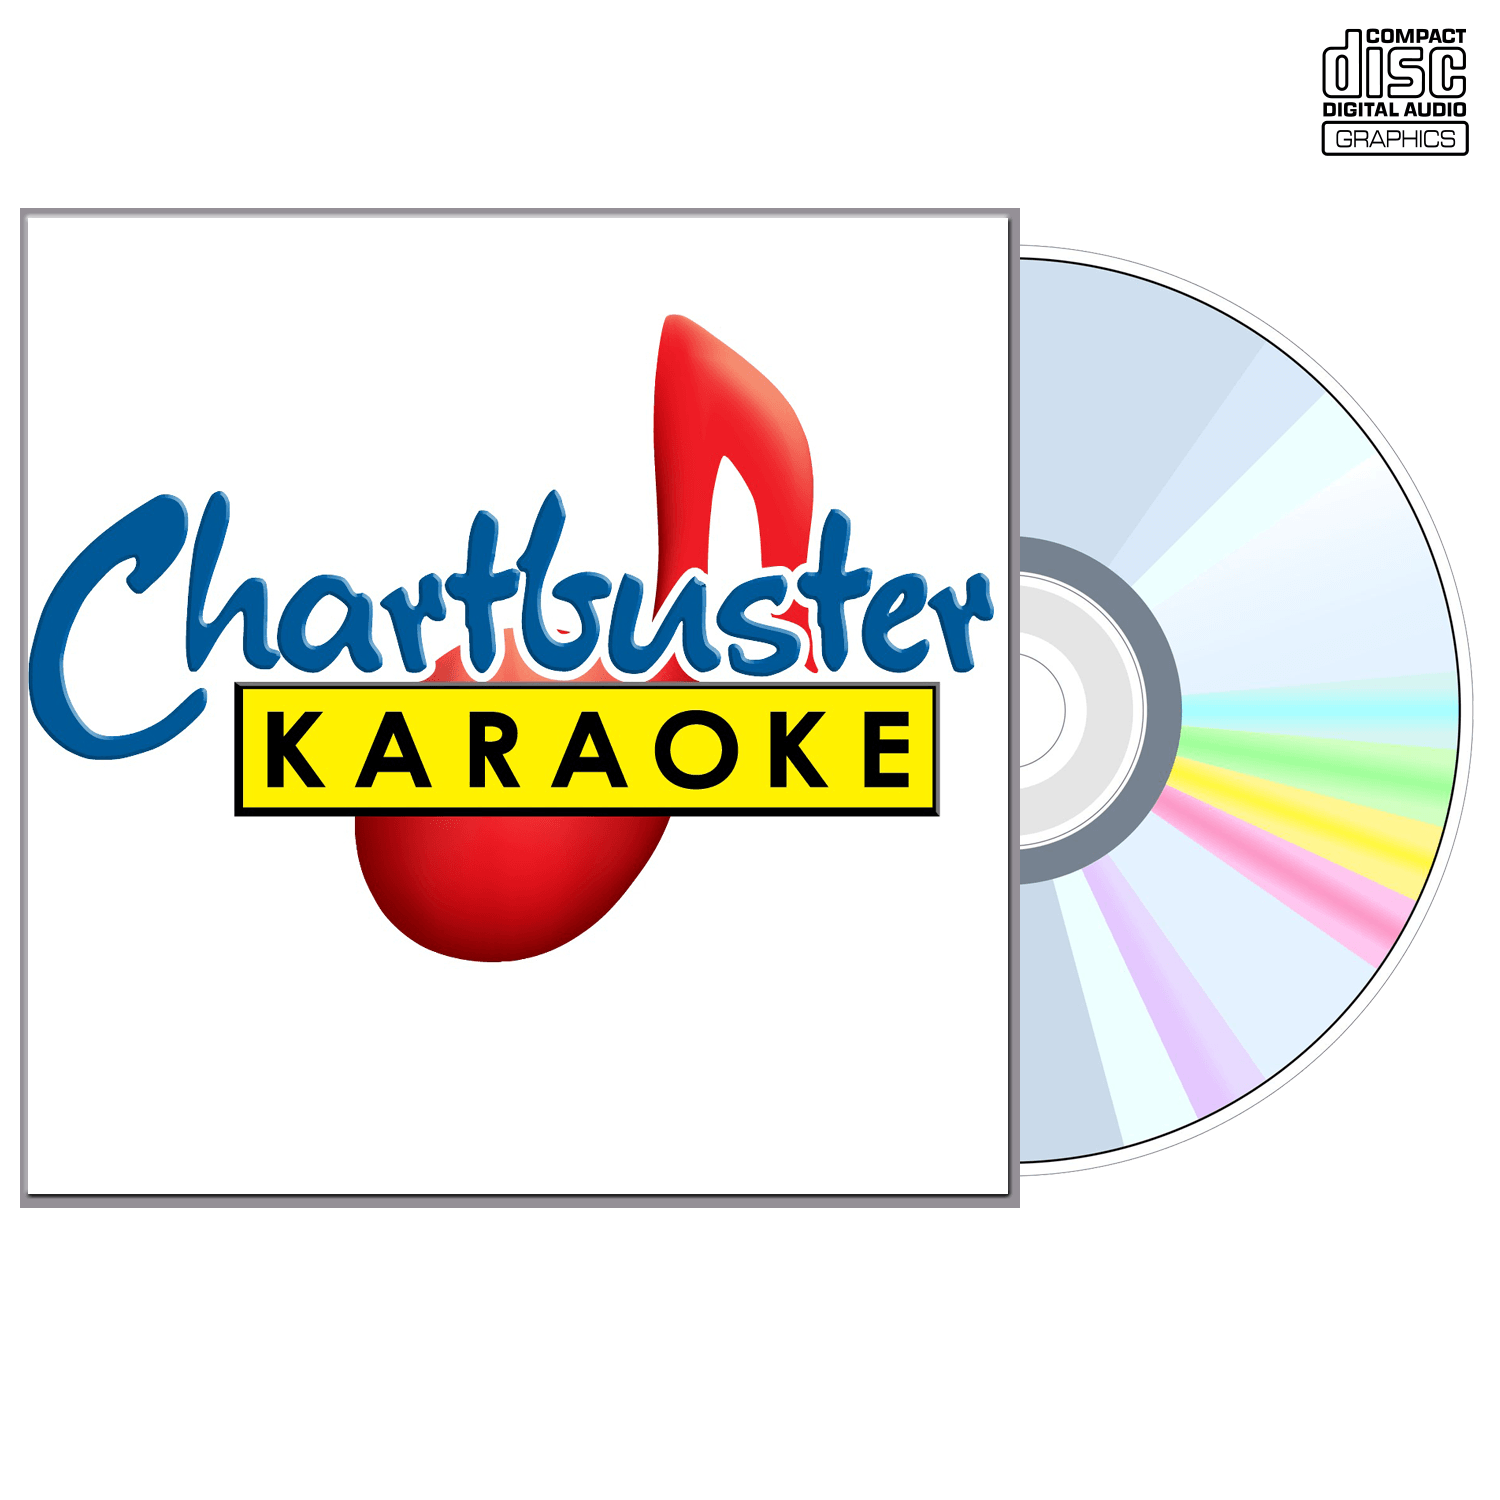 Sounds Of Sixties Vol 10 - CD+G - Chartbuster Karaoke - Karaoke Home Entertainment